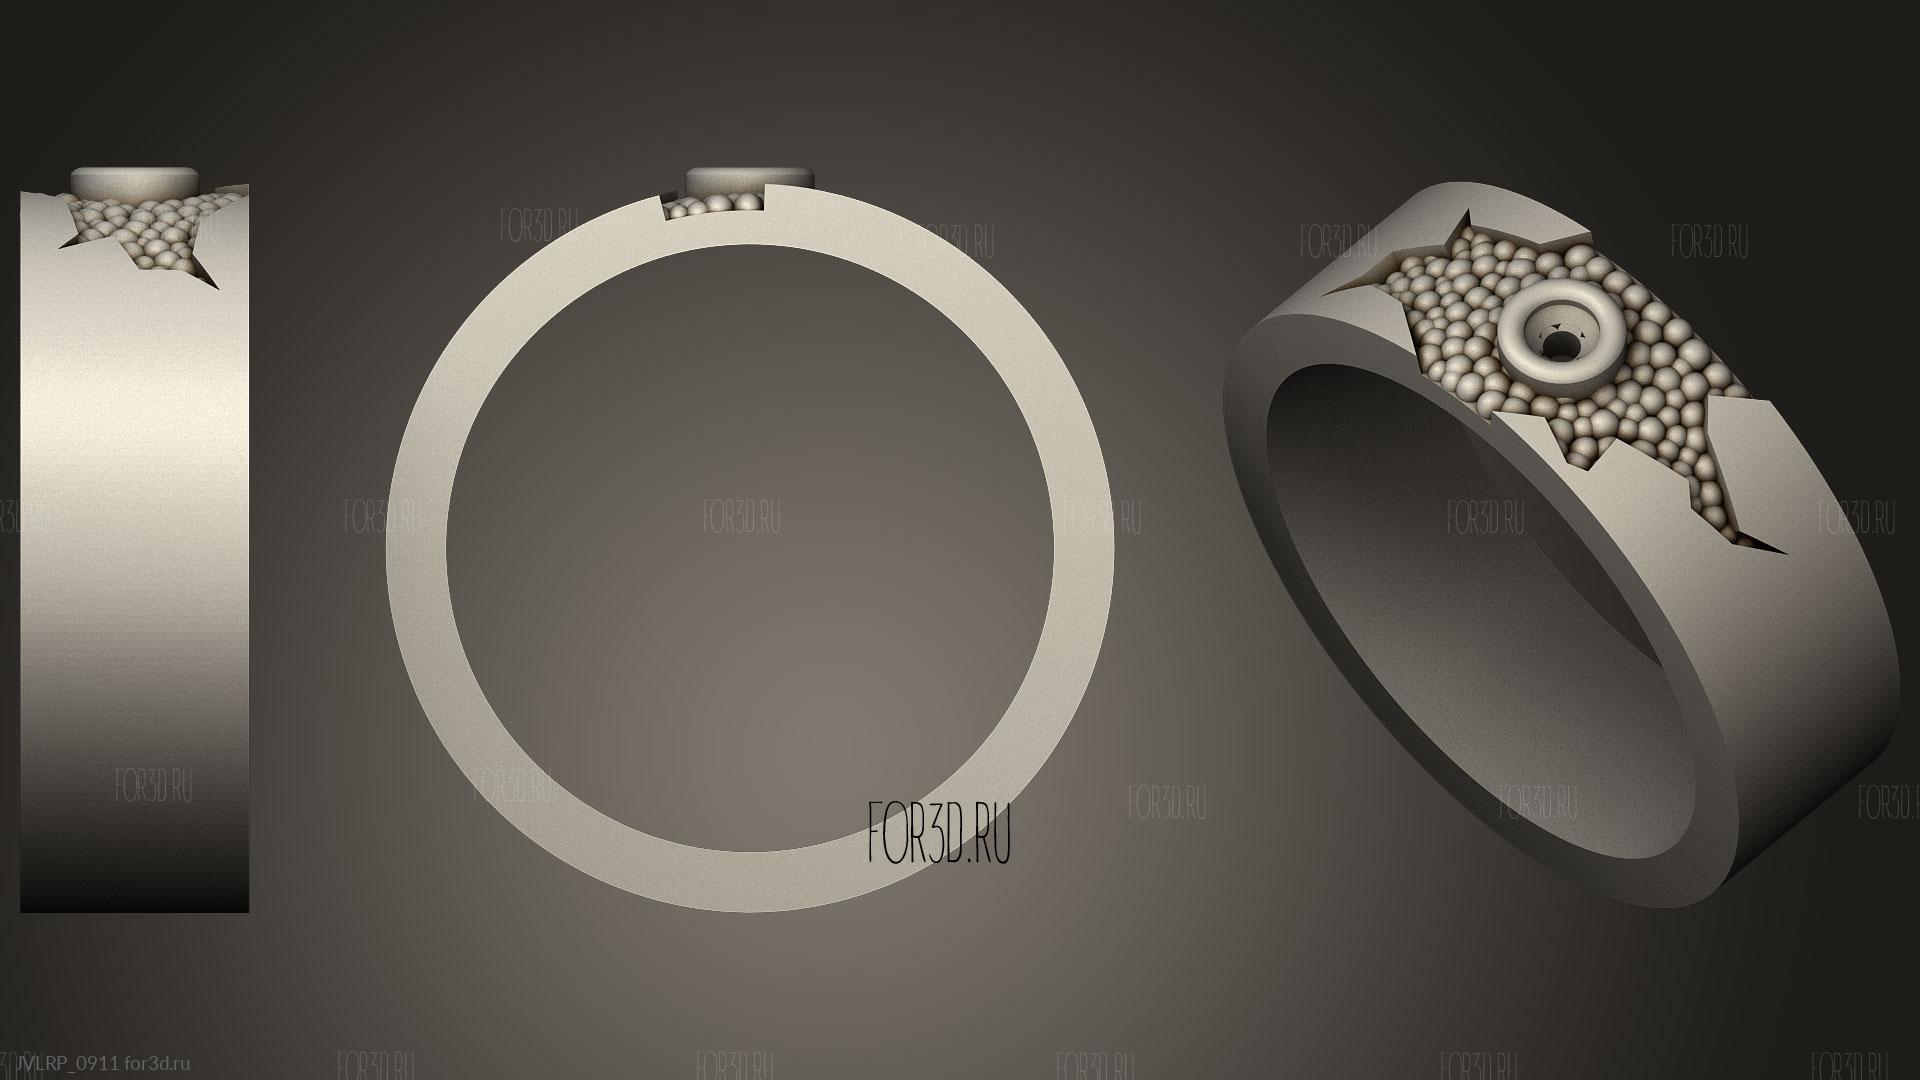 Two Name Personalised Ring - Abhika Jewels